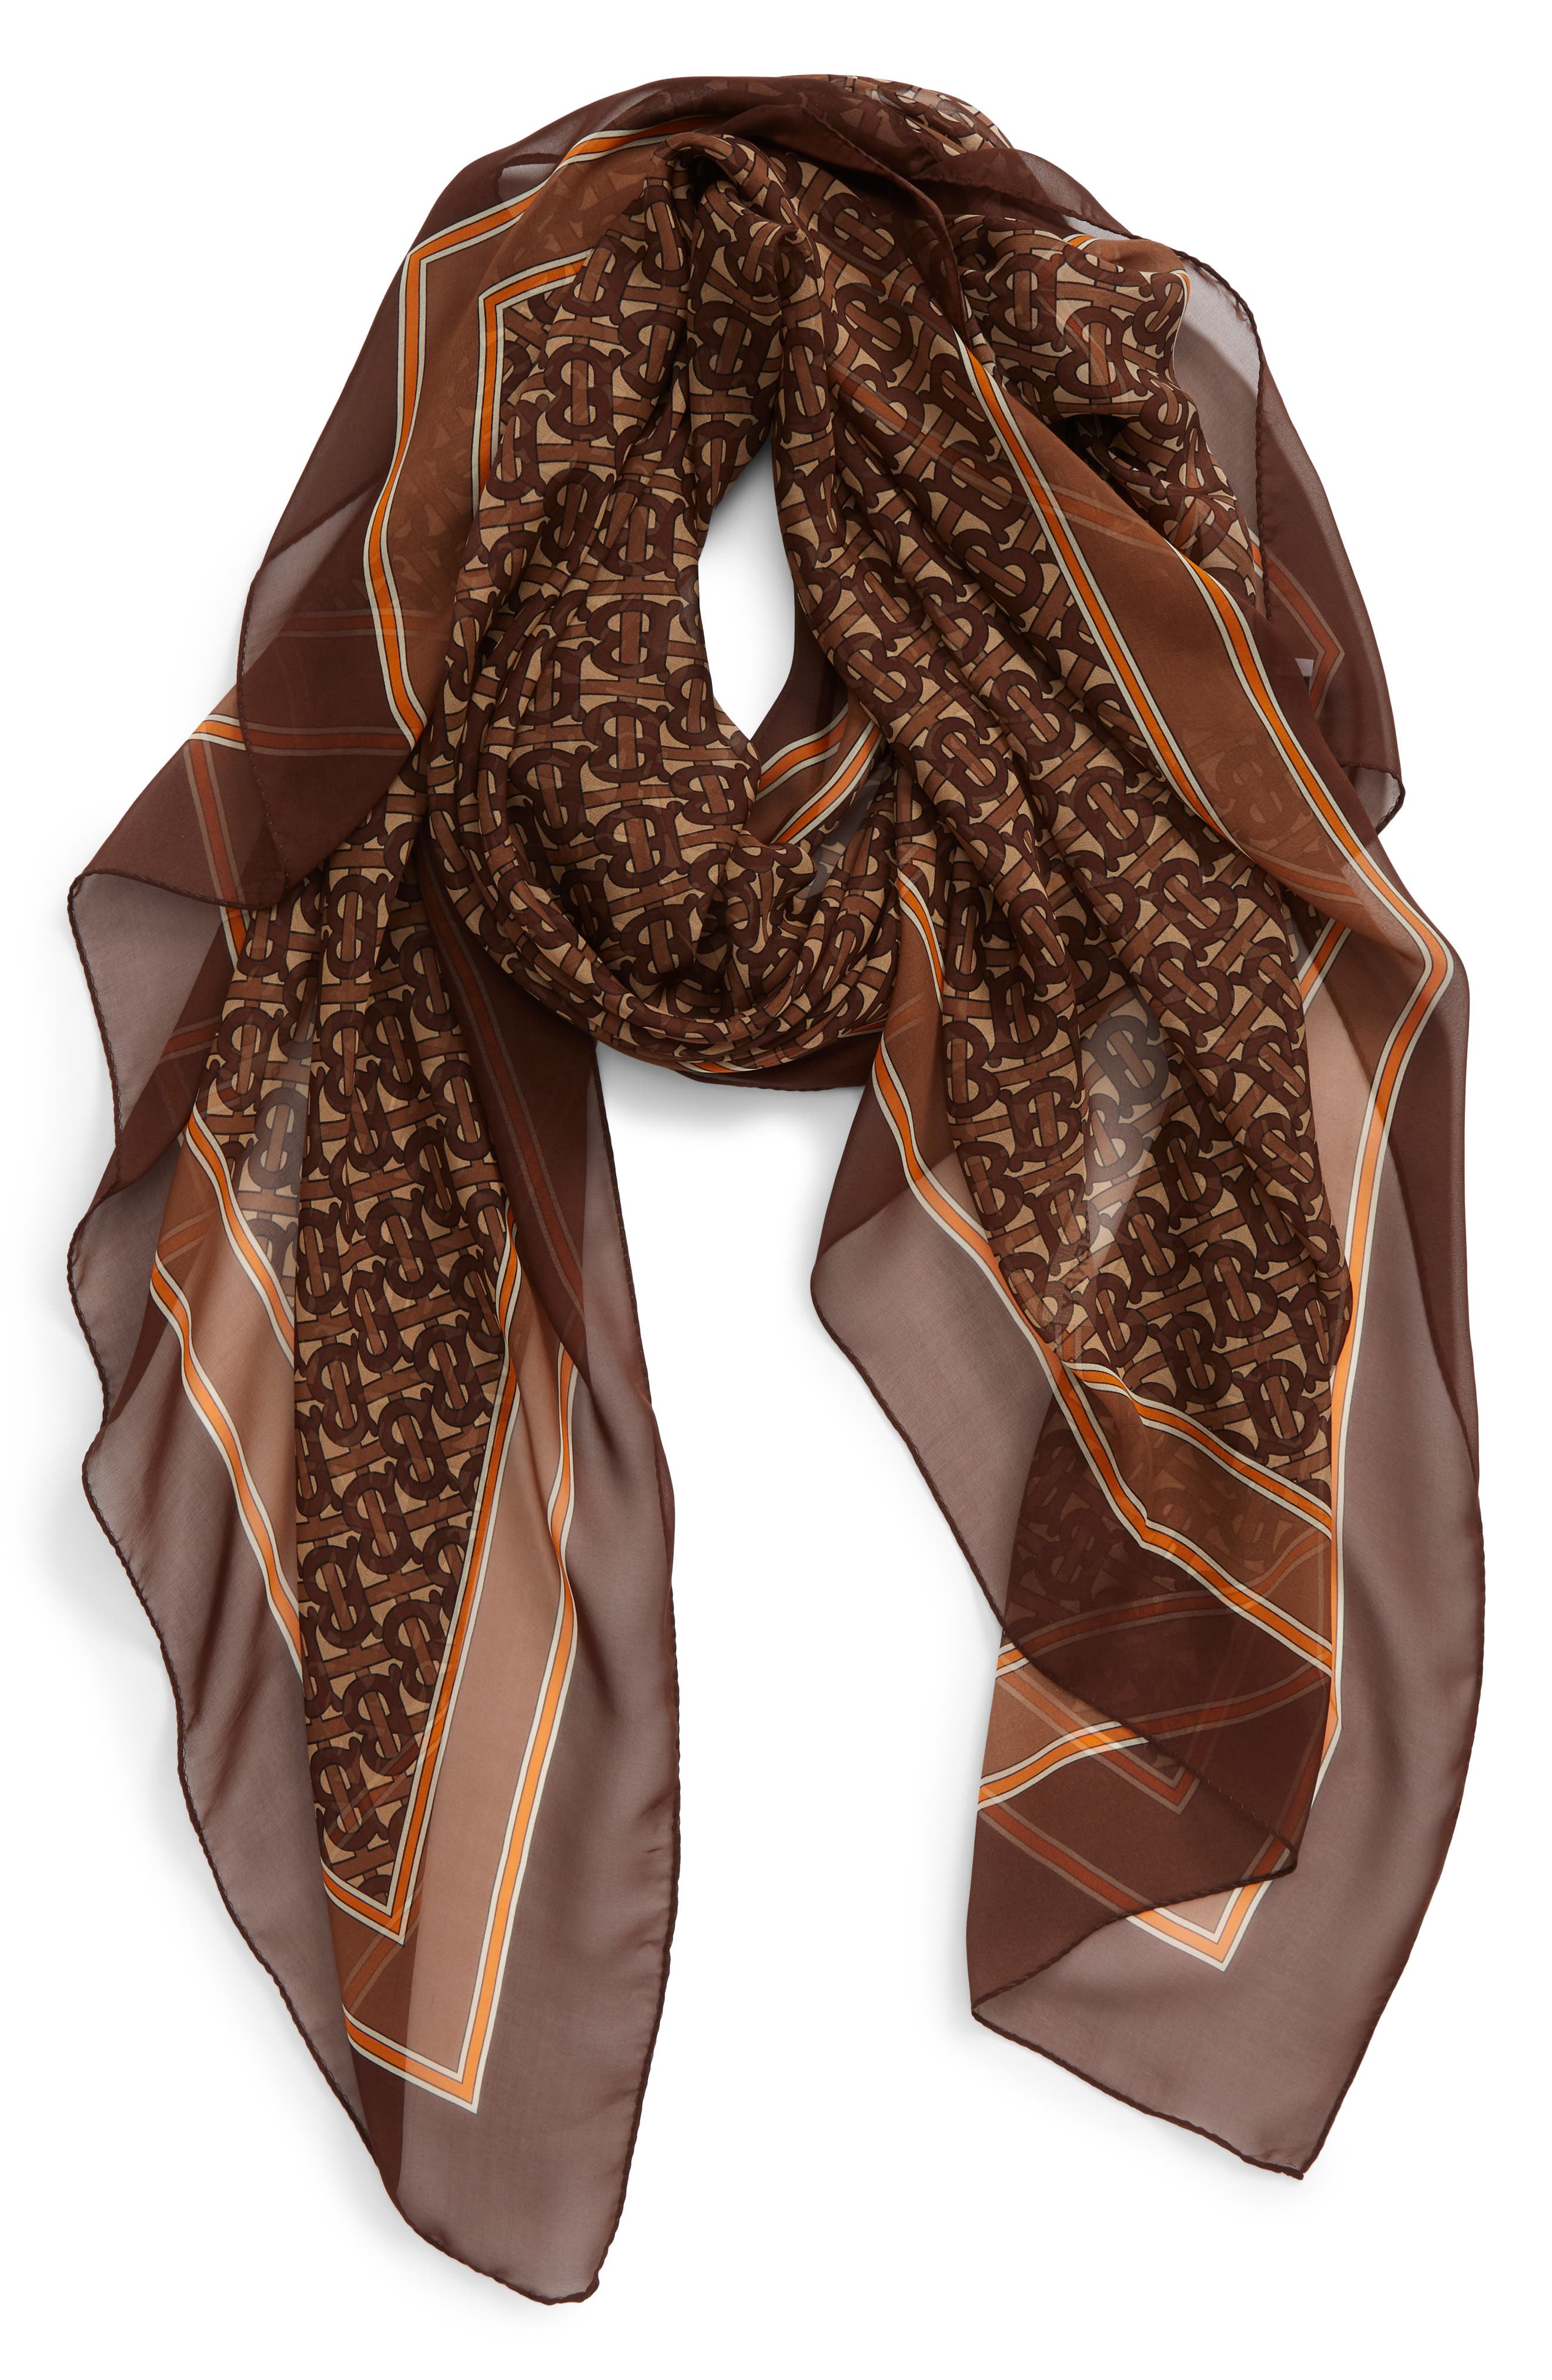 burberry chiffon scarf